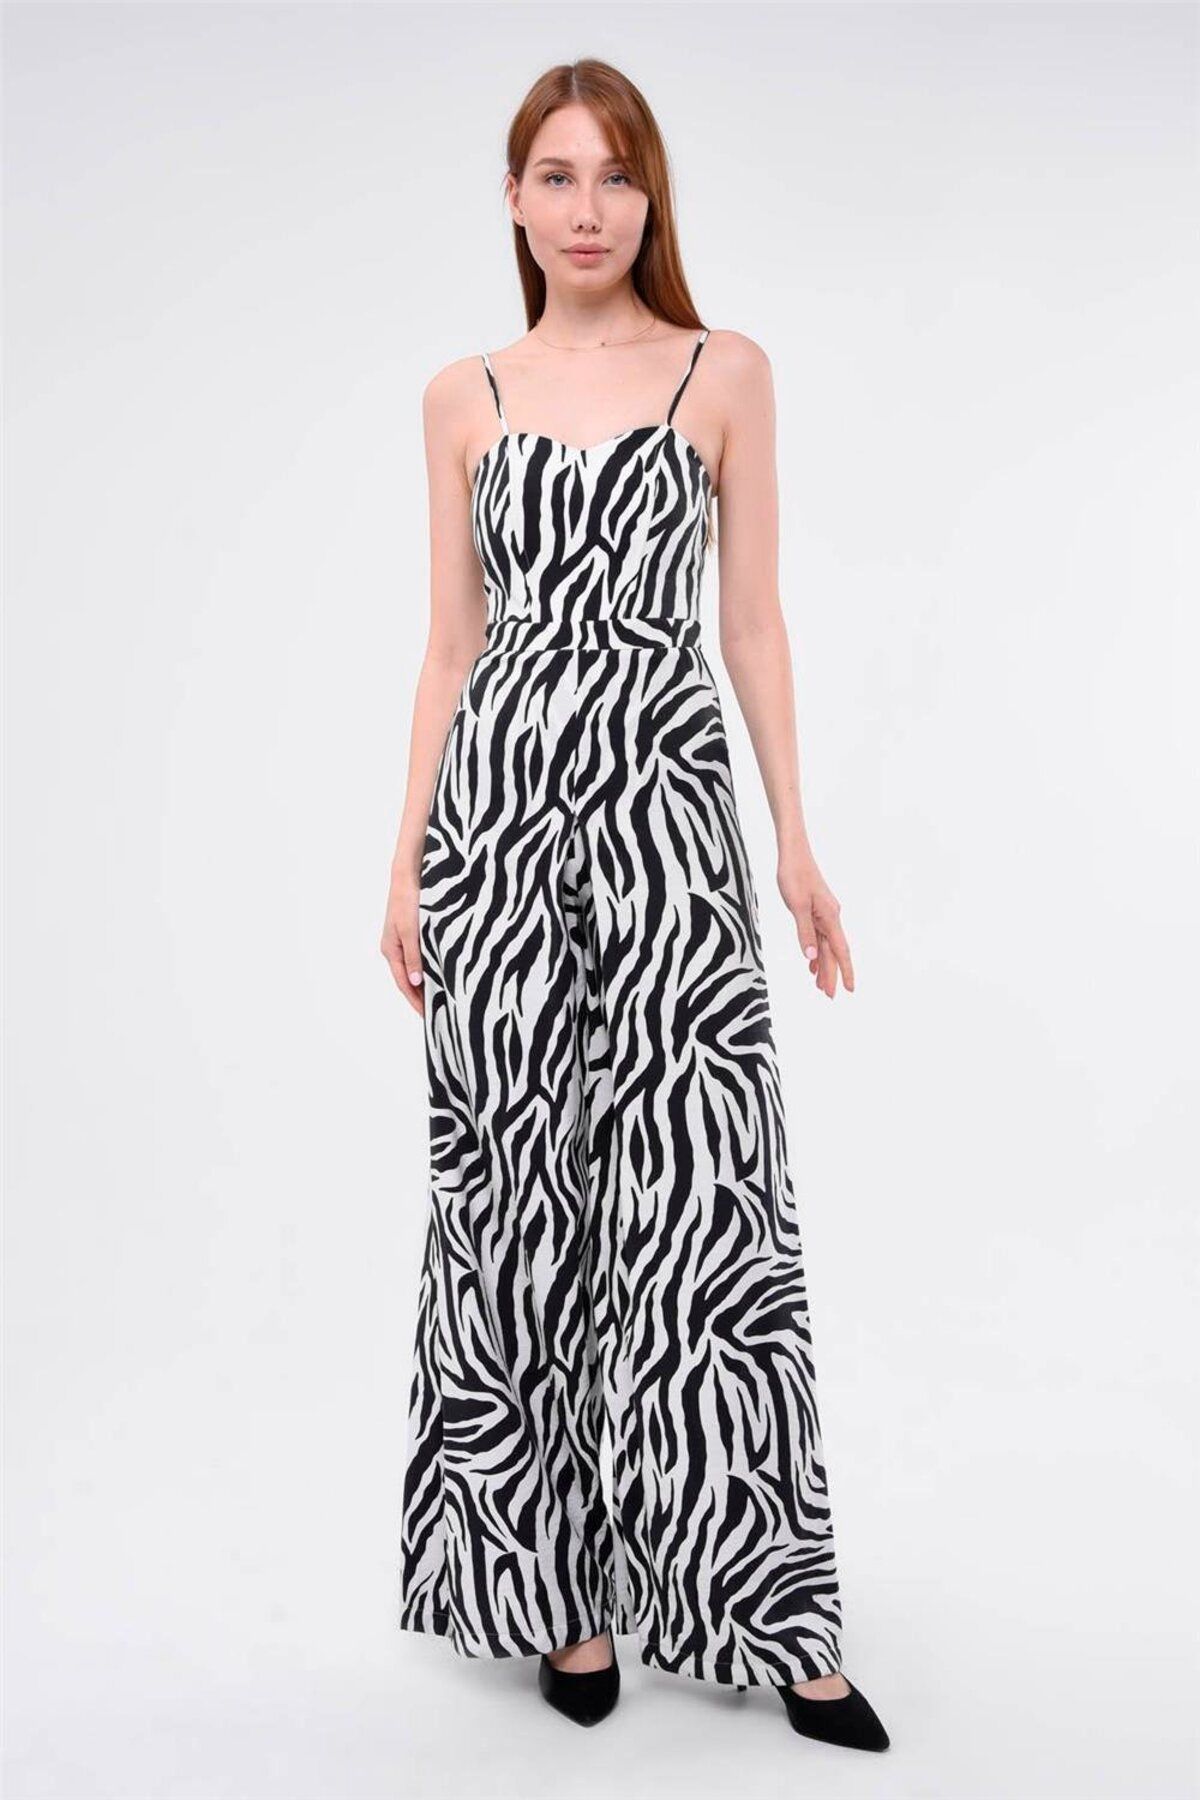 Home Store Tulum Zebra Desenli Balenli Kup İnce Sütyen Askı - Siyah-beyaz